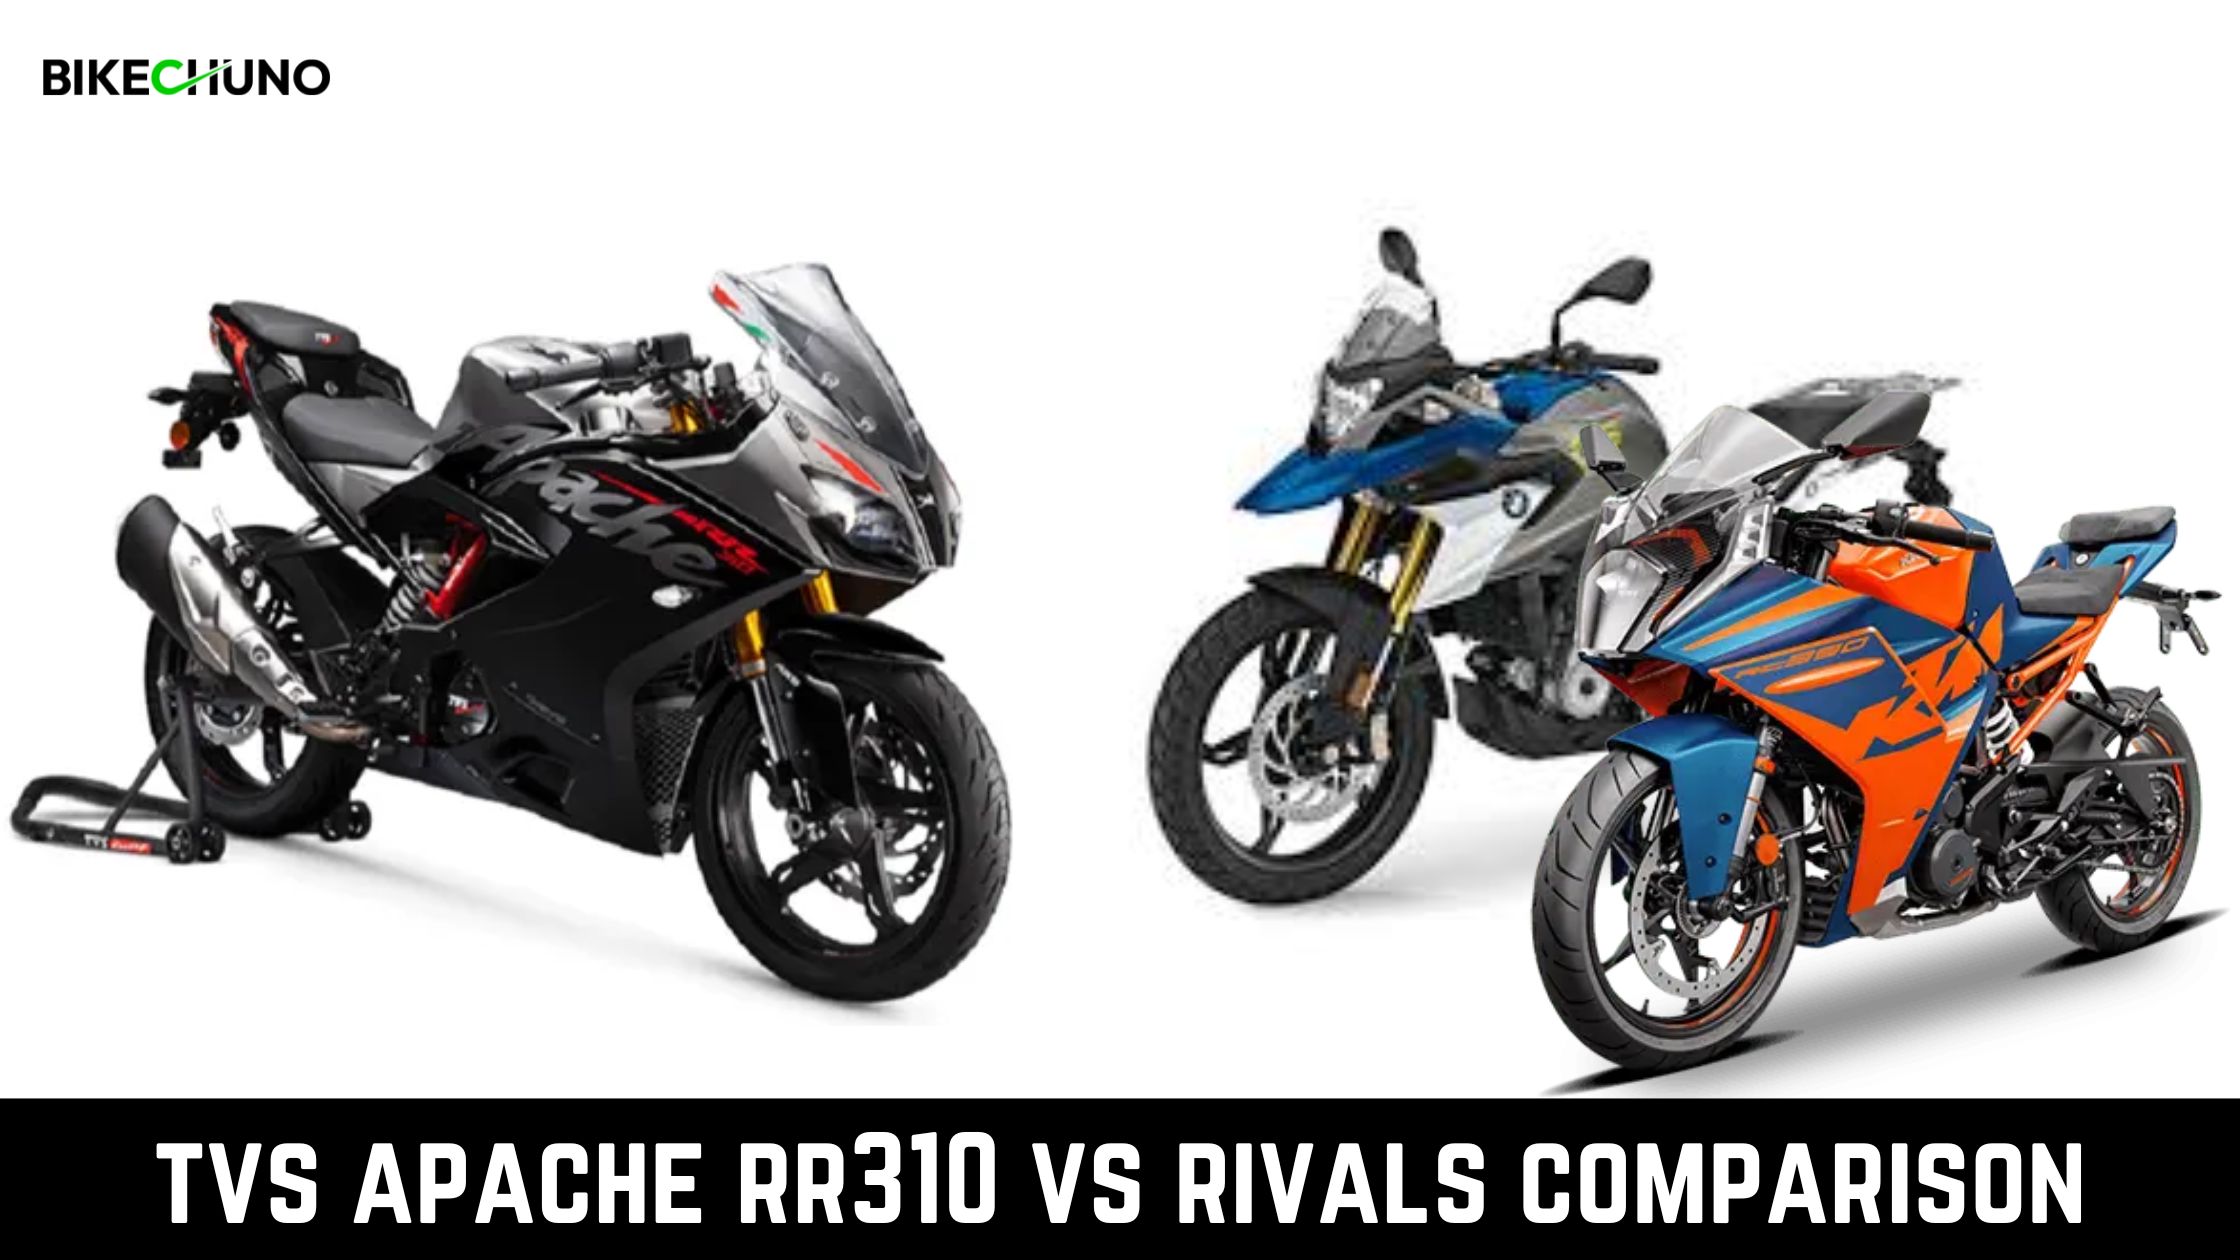 tvs apache rr310 vs rivals comparison